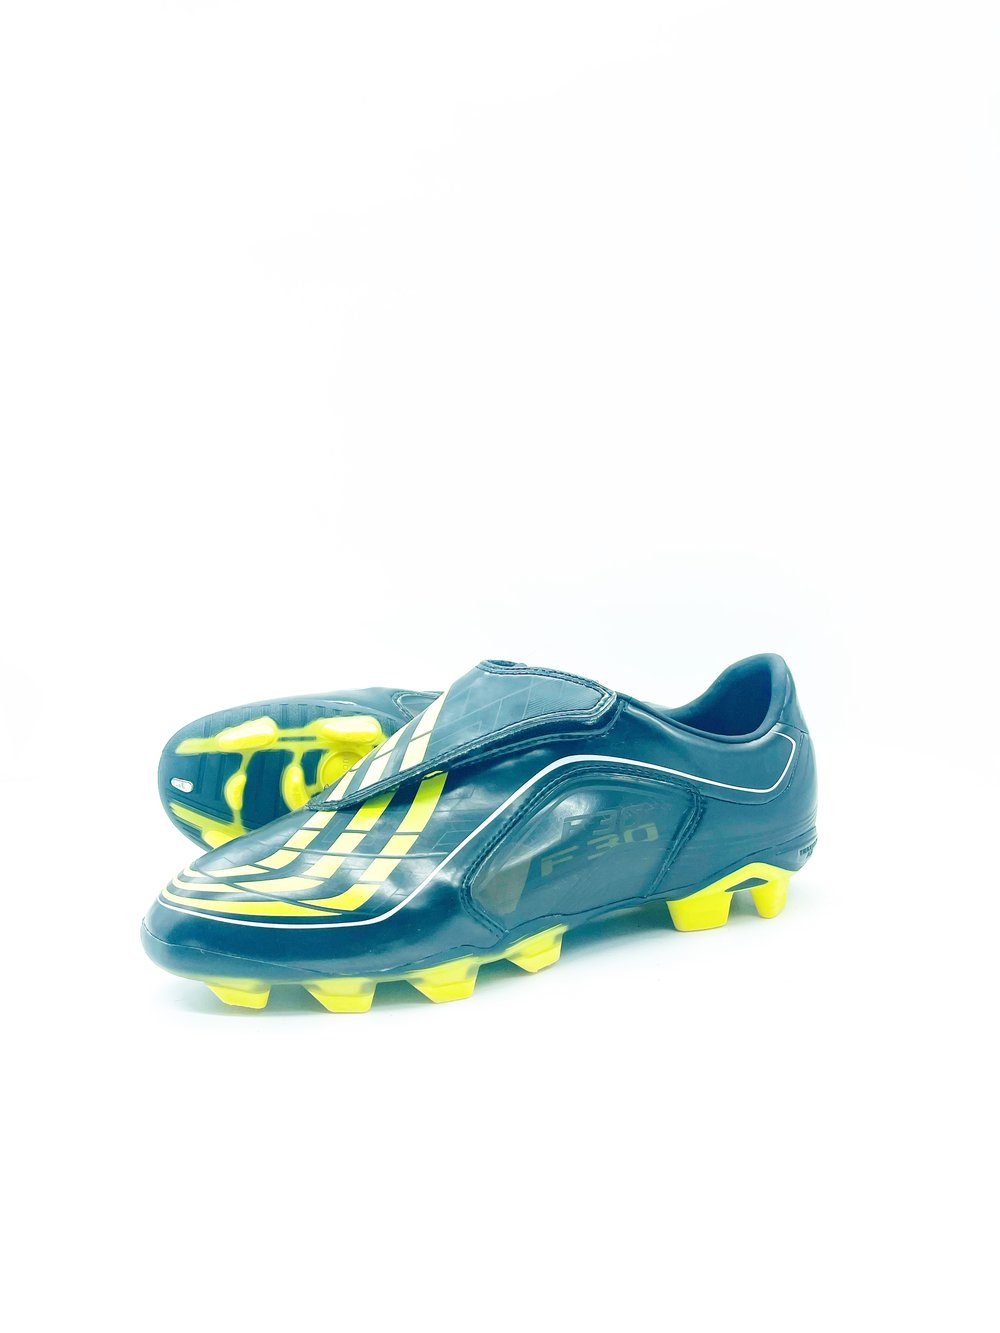 Onza Rama mamífero Tbtclassicfootballboots — Adidas f30.9 FG BLACK